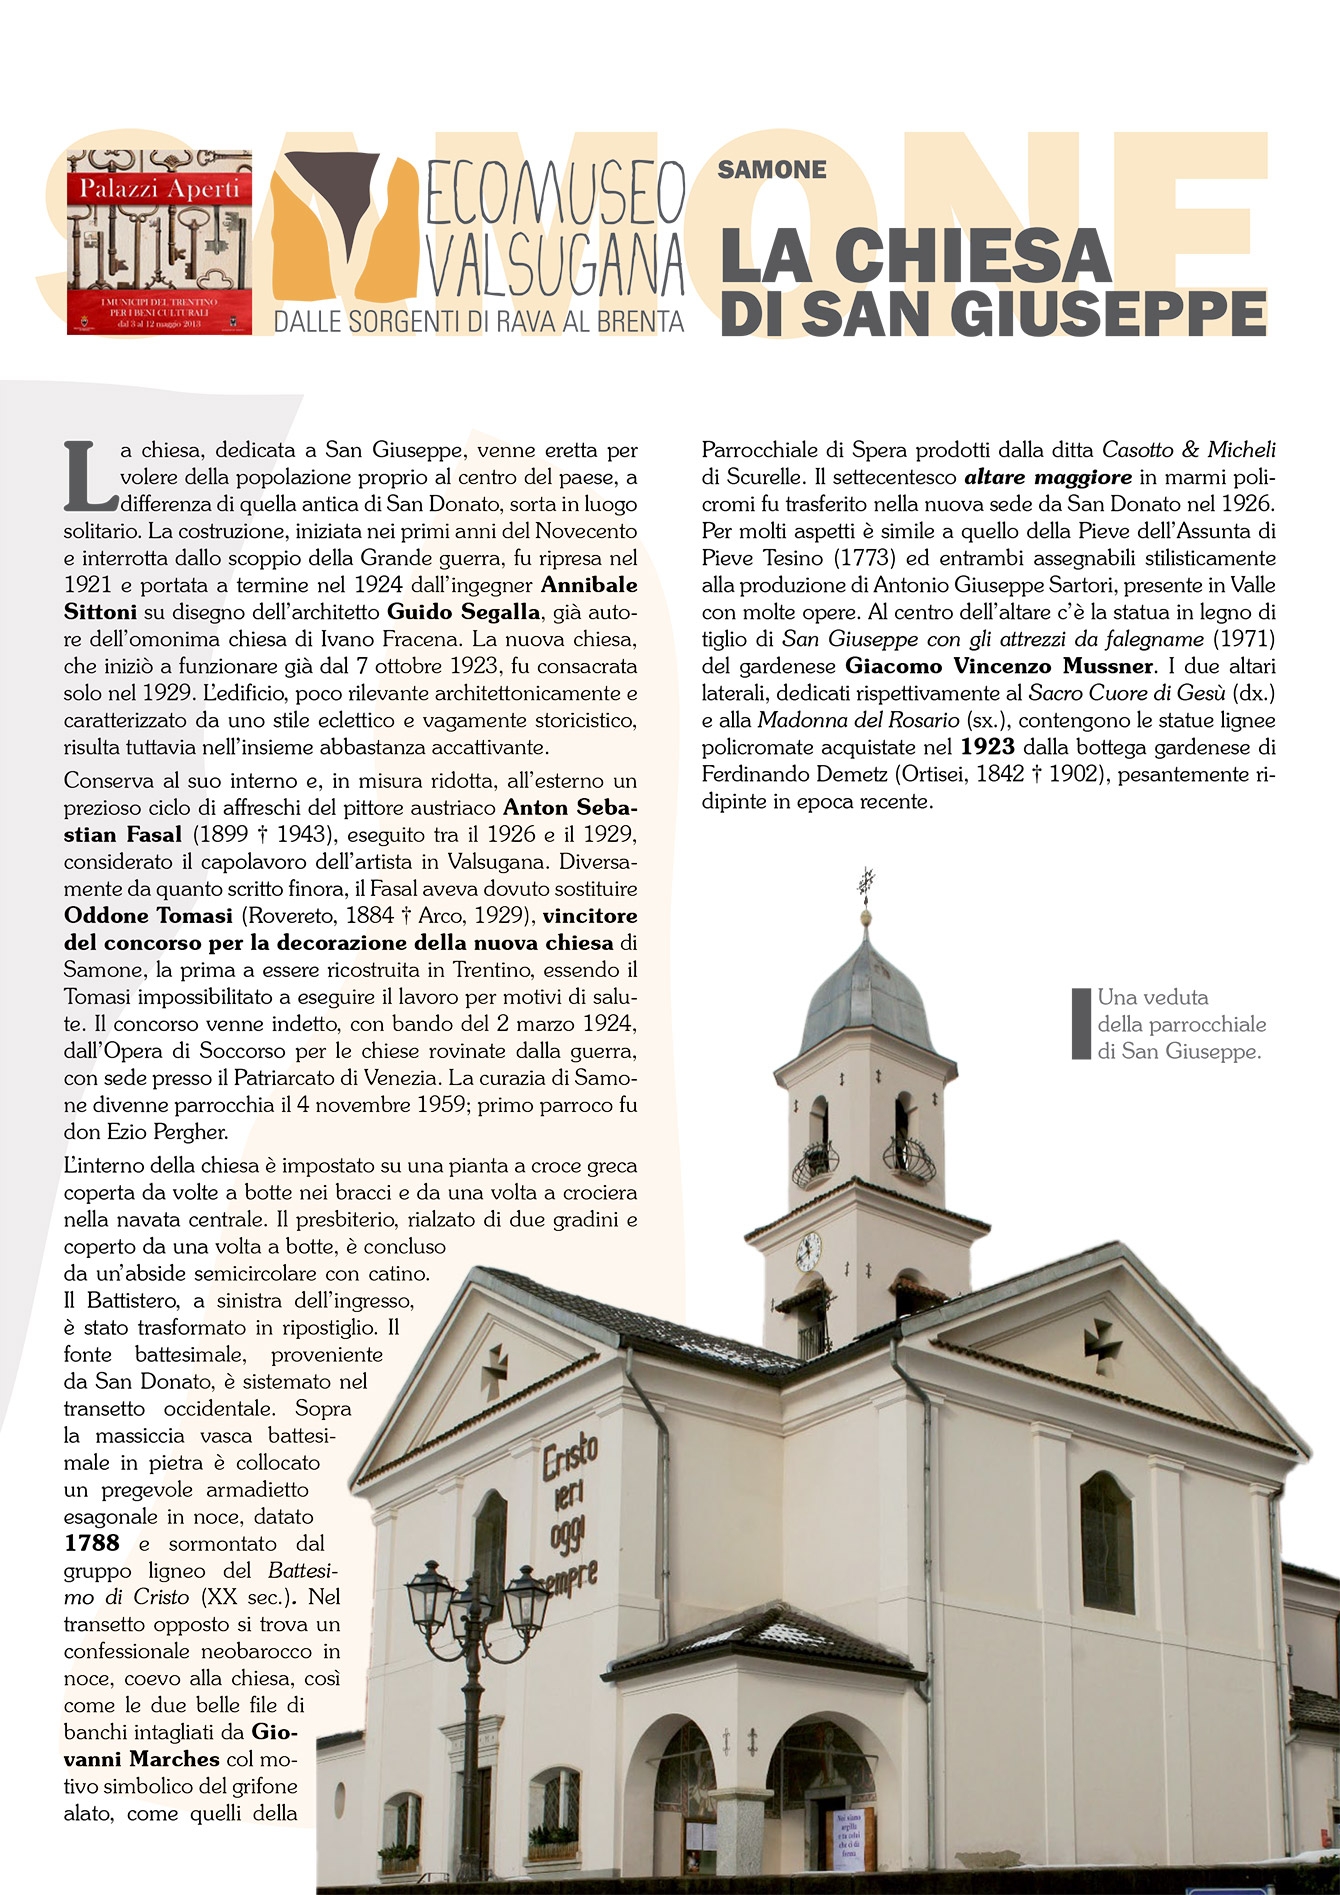 Samone: la chiesa di San Giuseppe